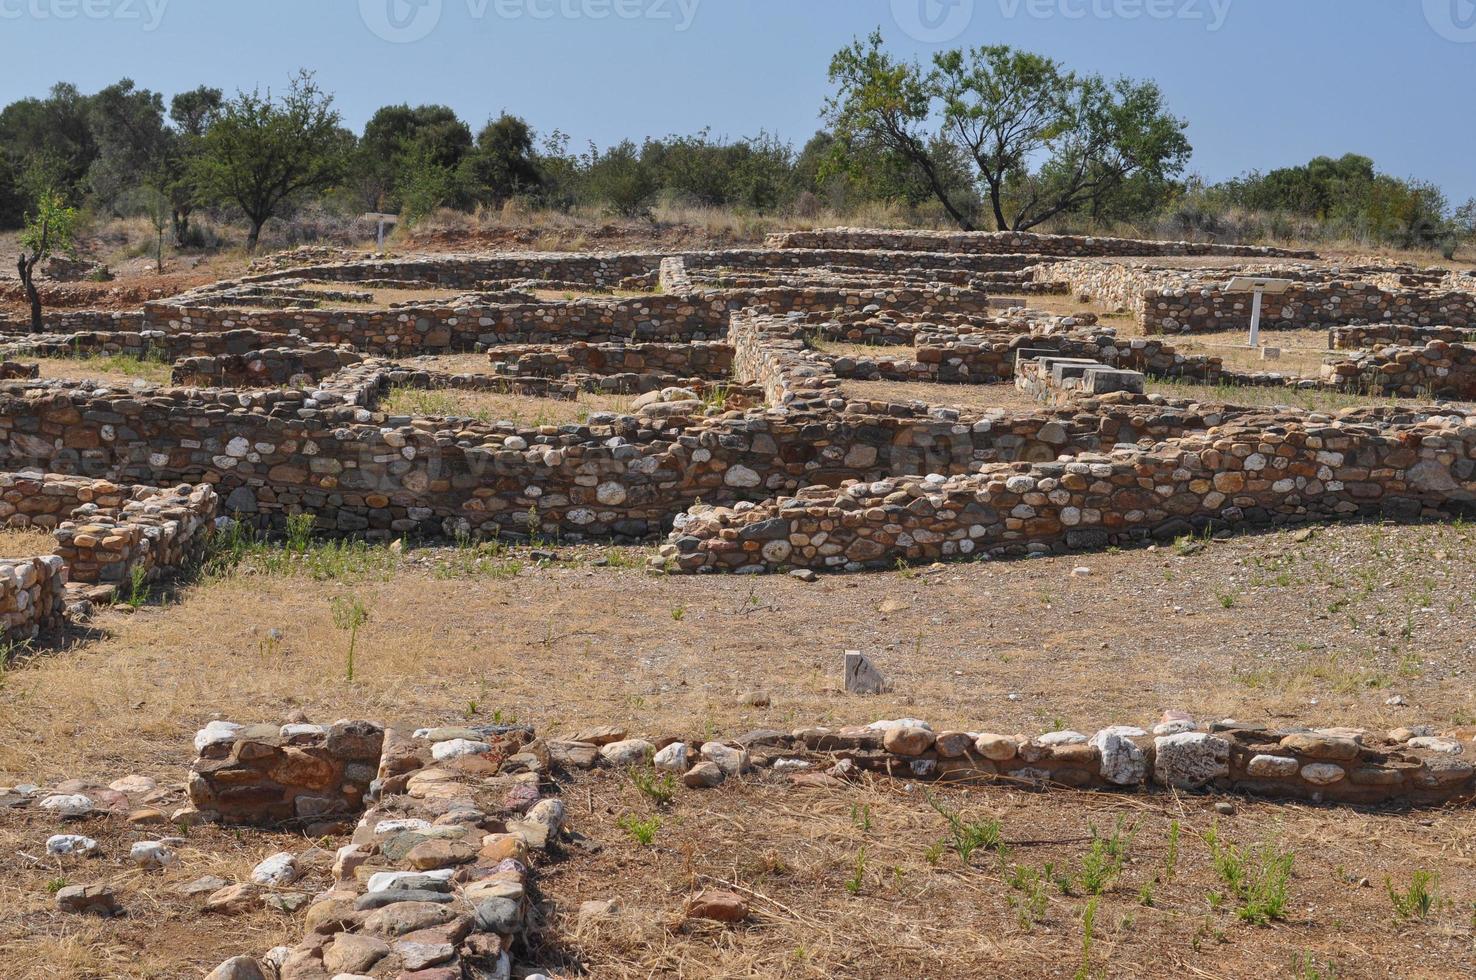 olynthus ruiner i Chalkidiki foto